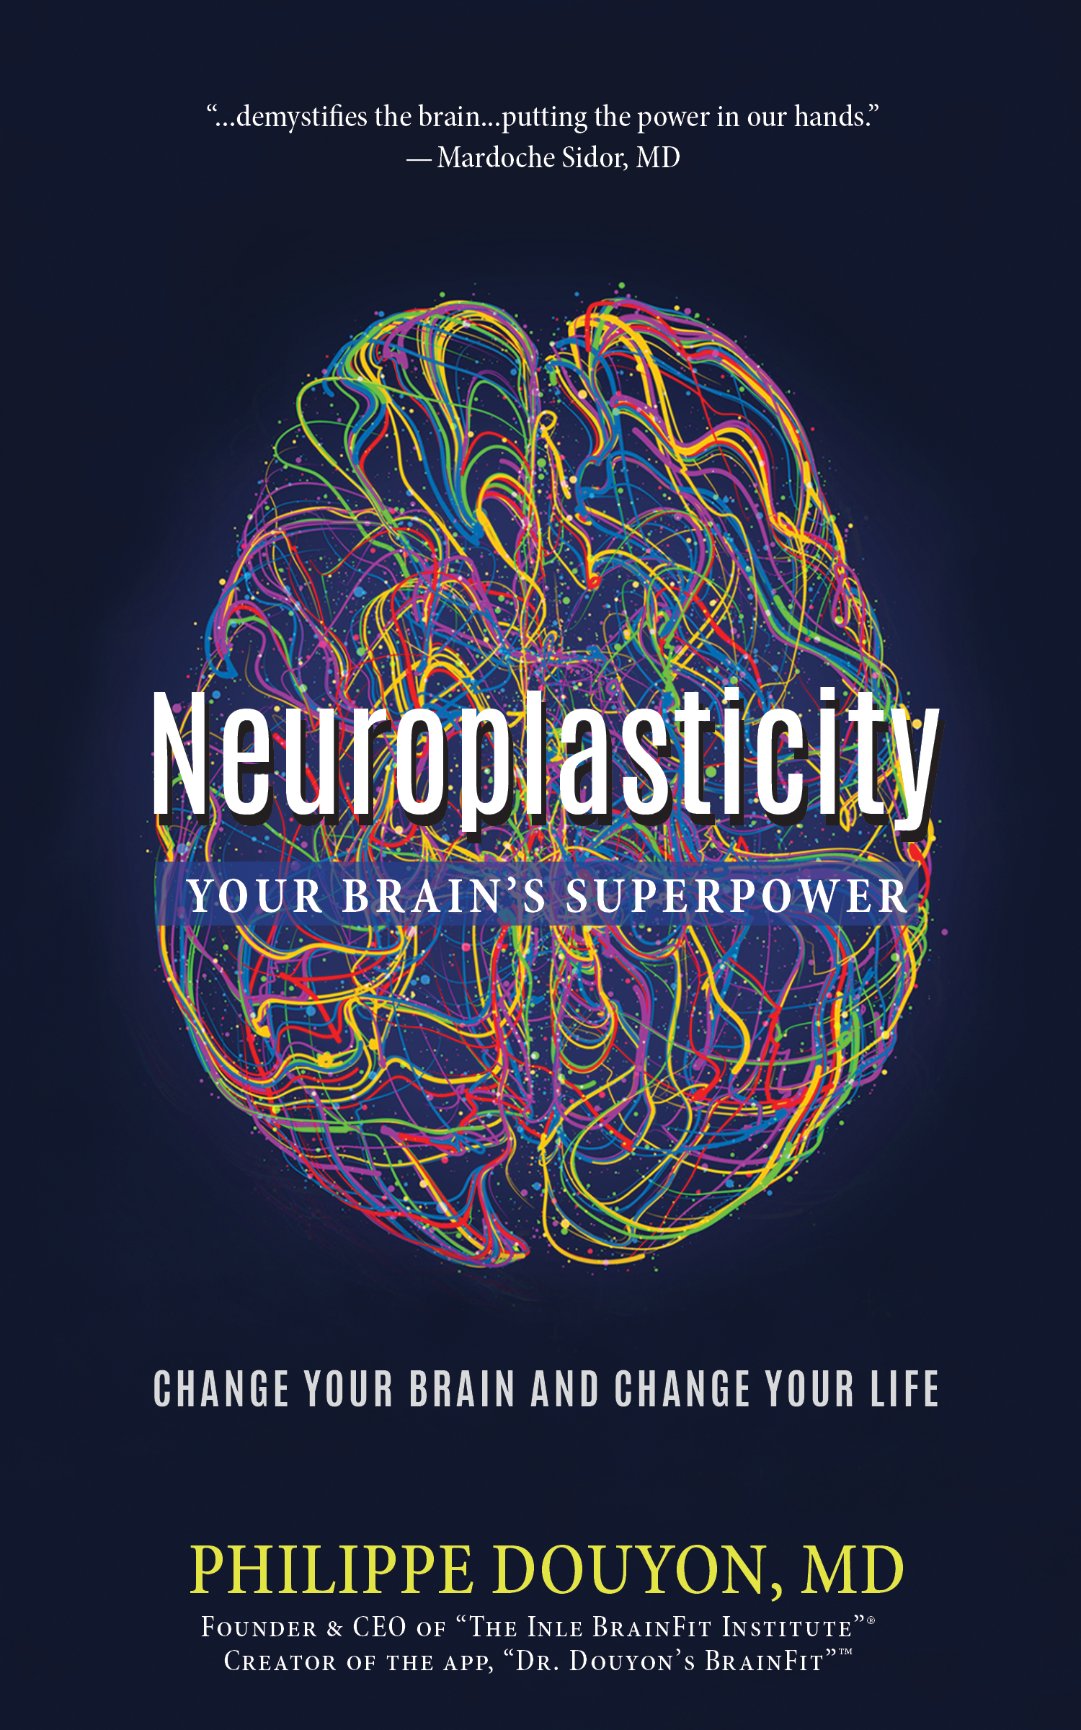 “Neuroplasticity: Your Brain’s Superpower - The Inle BrainFit Institute